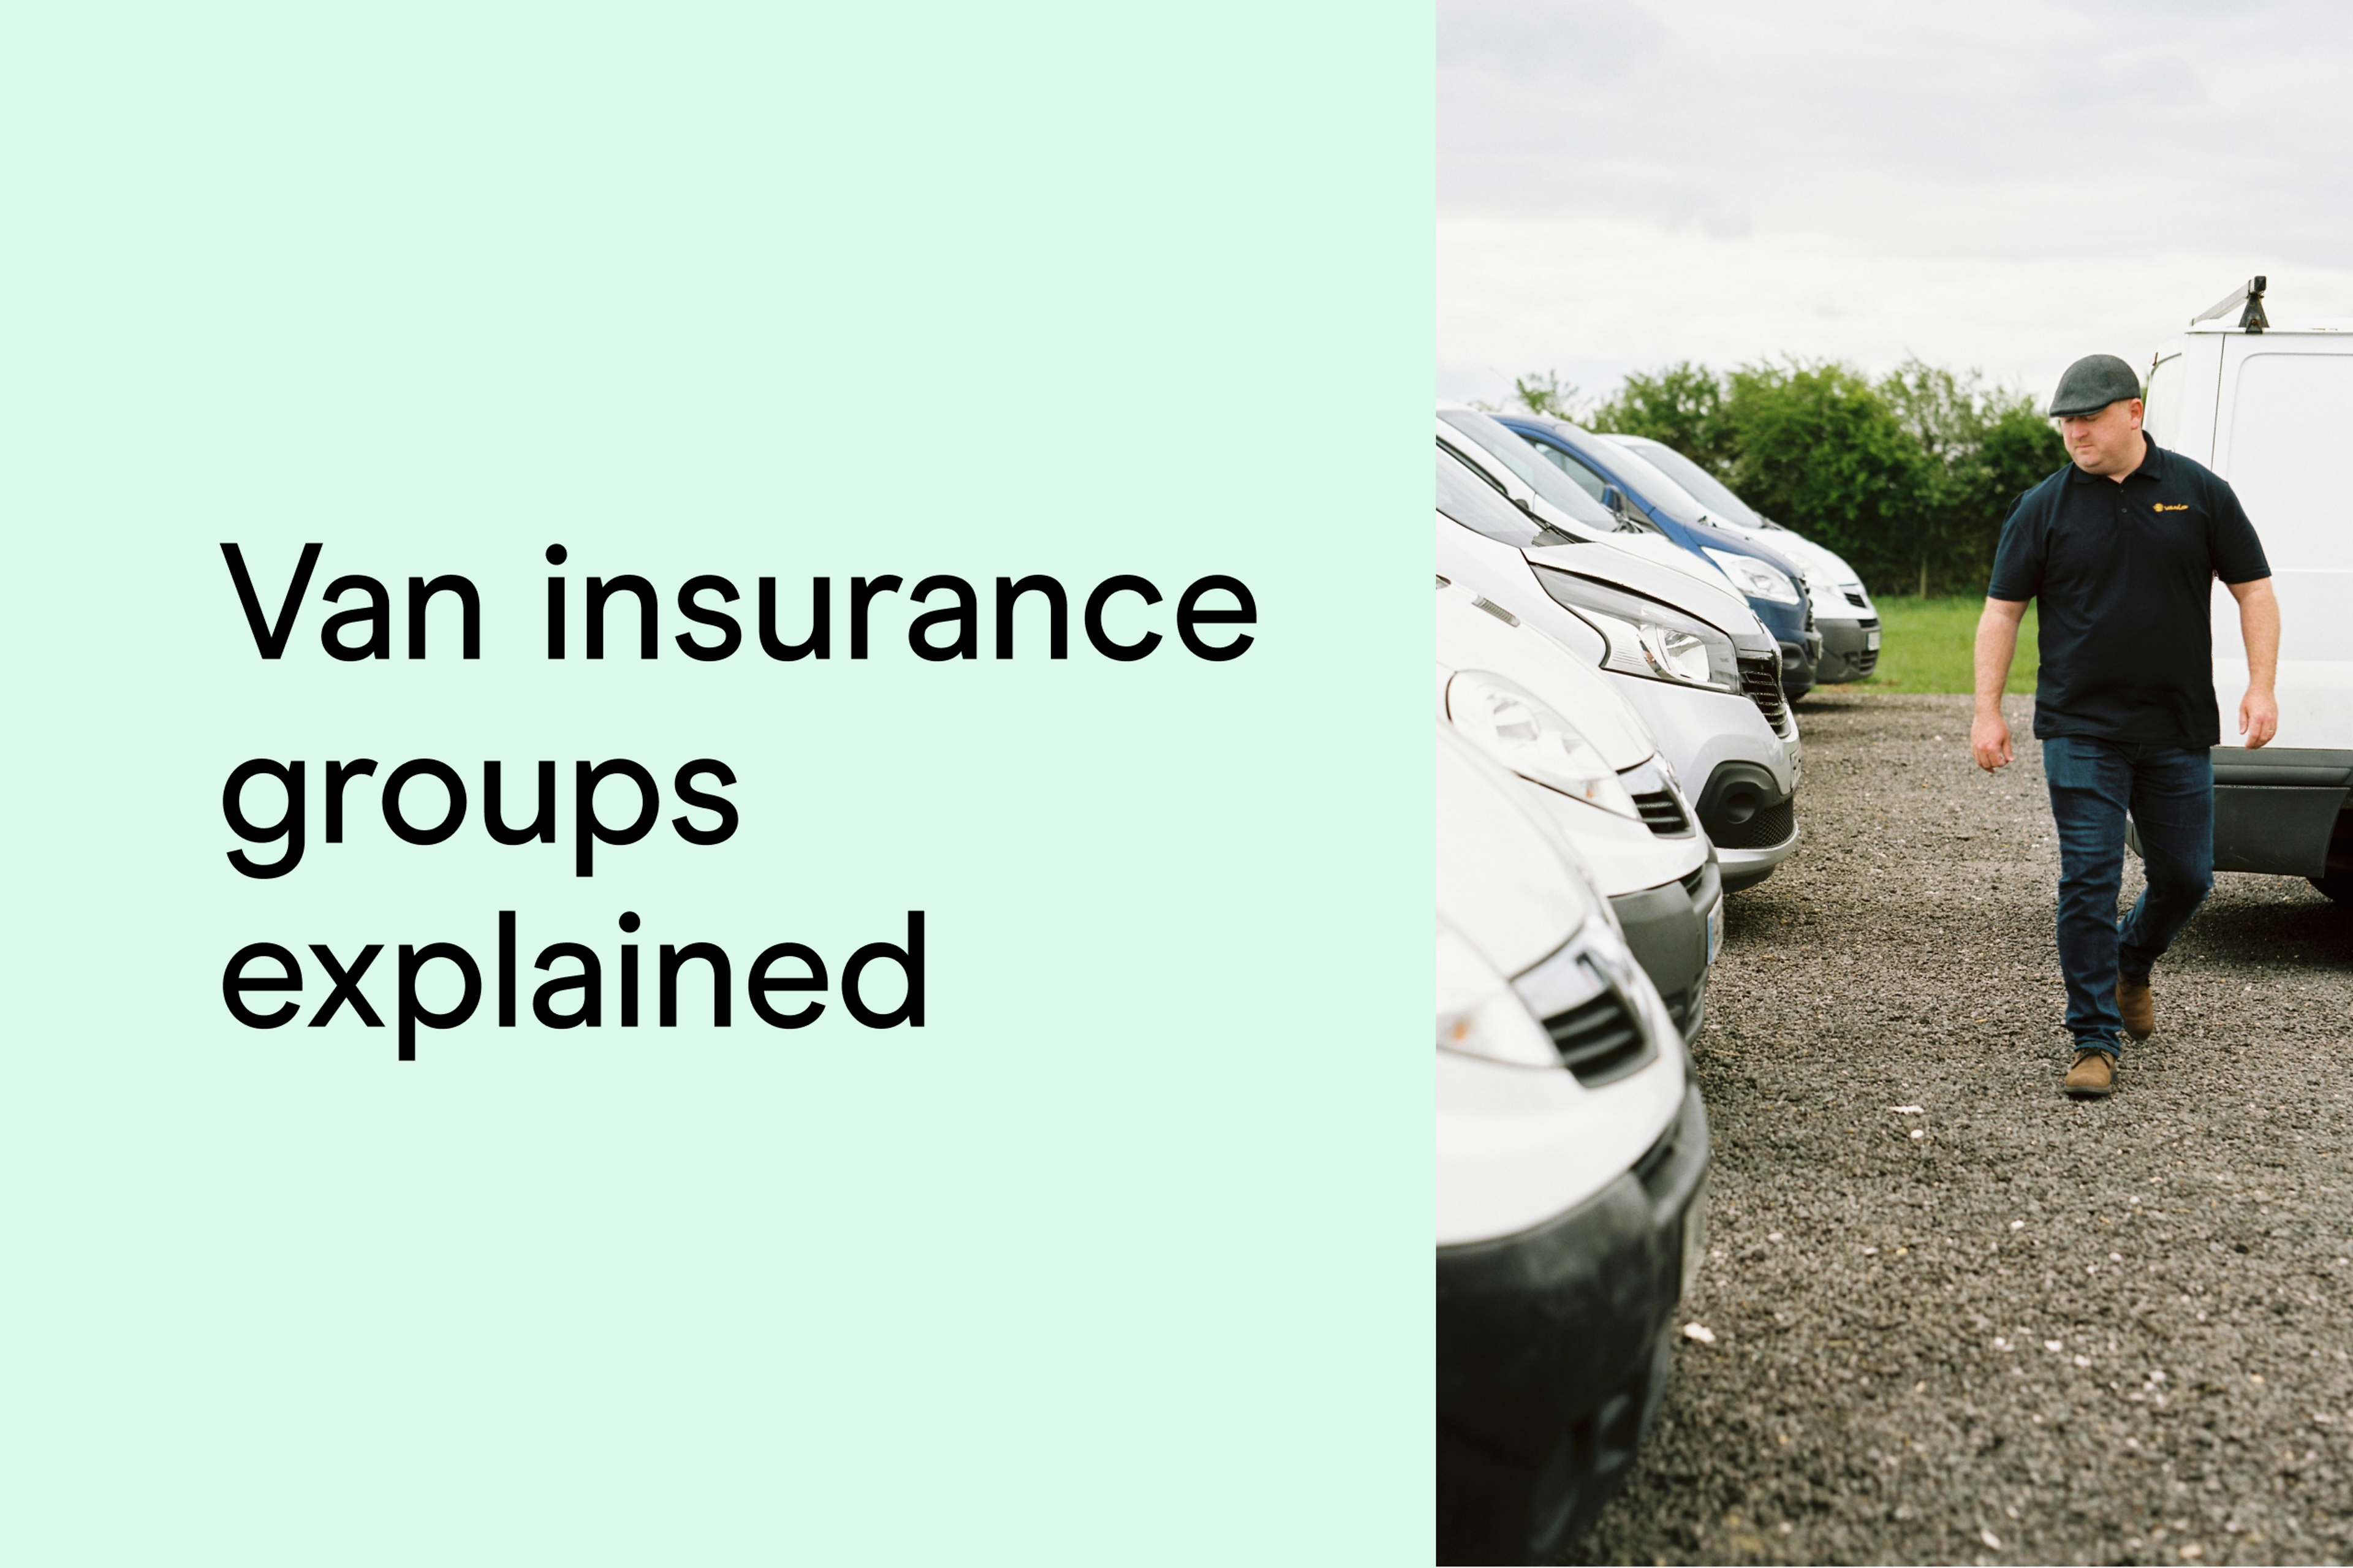 Van insurance groups explained